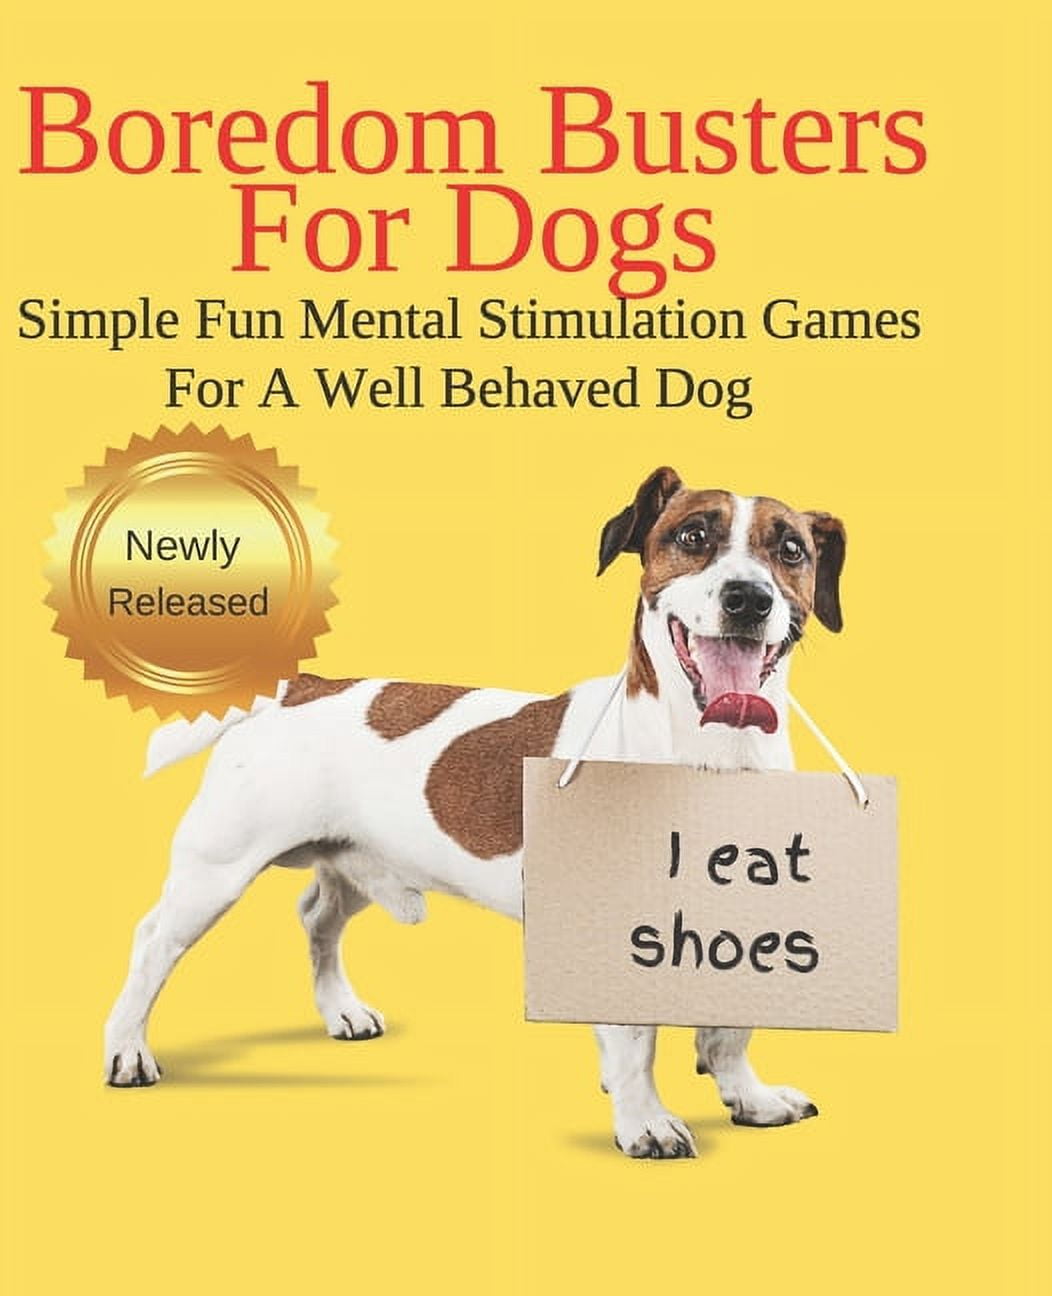 21 (Super Easy) Ways To Mentally Stimulate Your Dog - Dog Sense